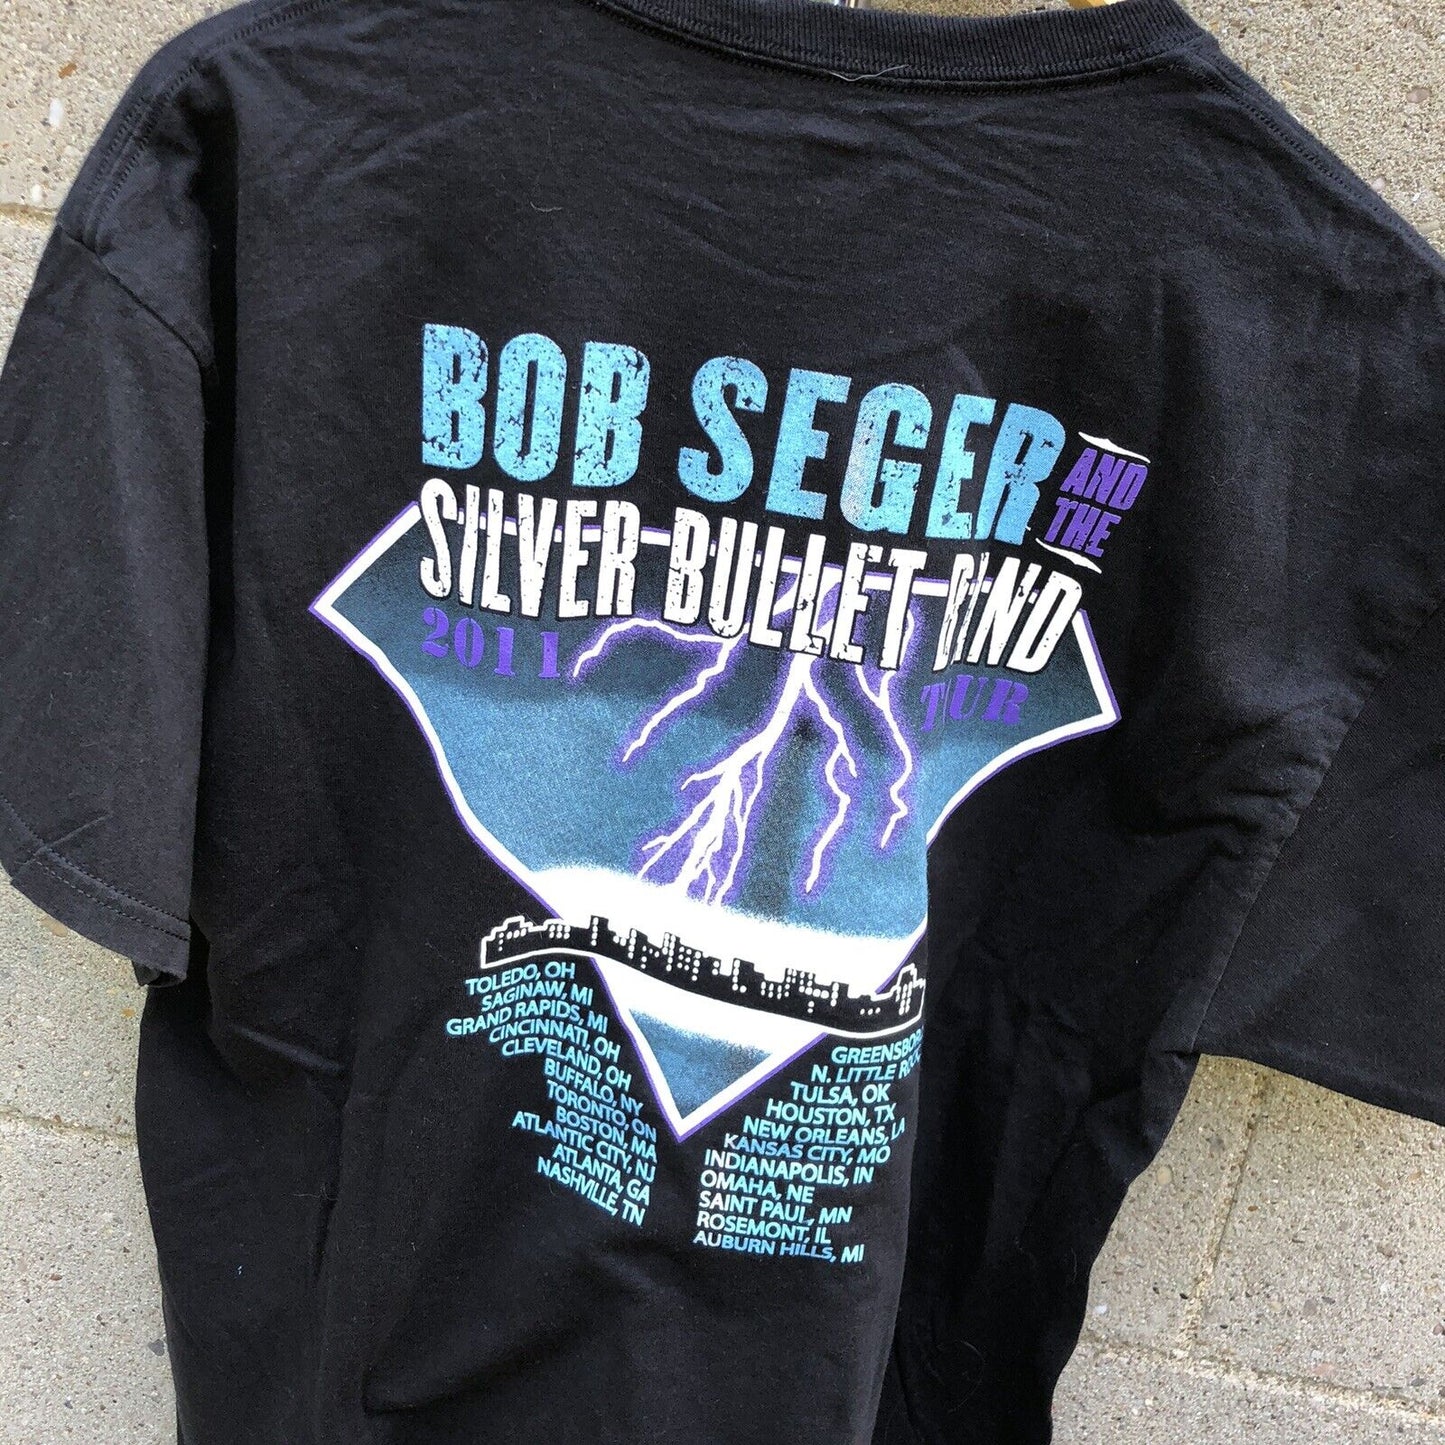 2011 BOB SEGER CONCERT TOUR SHOW DATE BAND T-SHIRT MEN'S ADULT LARGE